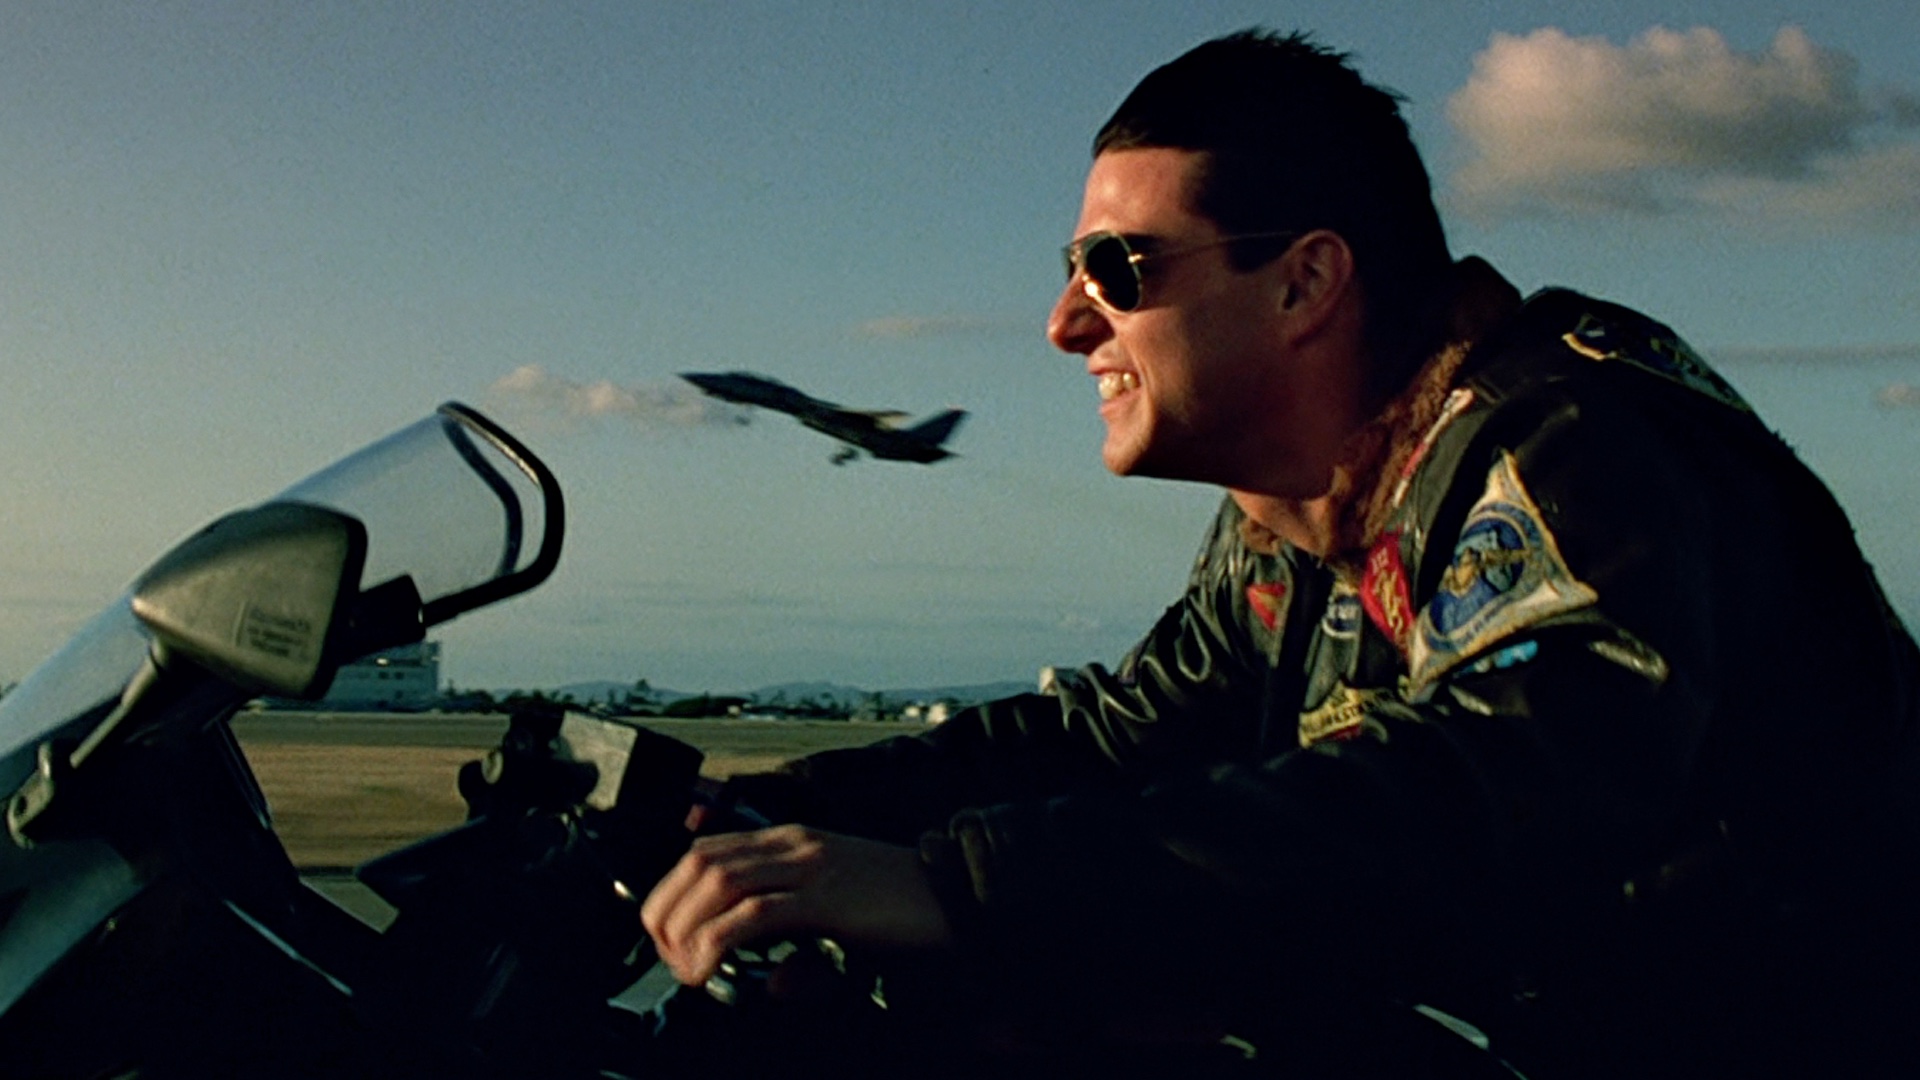 TOP GUN: MAVERICK Set Photo Features Tom Cruise Back on His Motorcycle